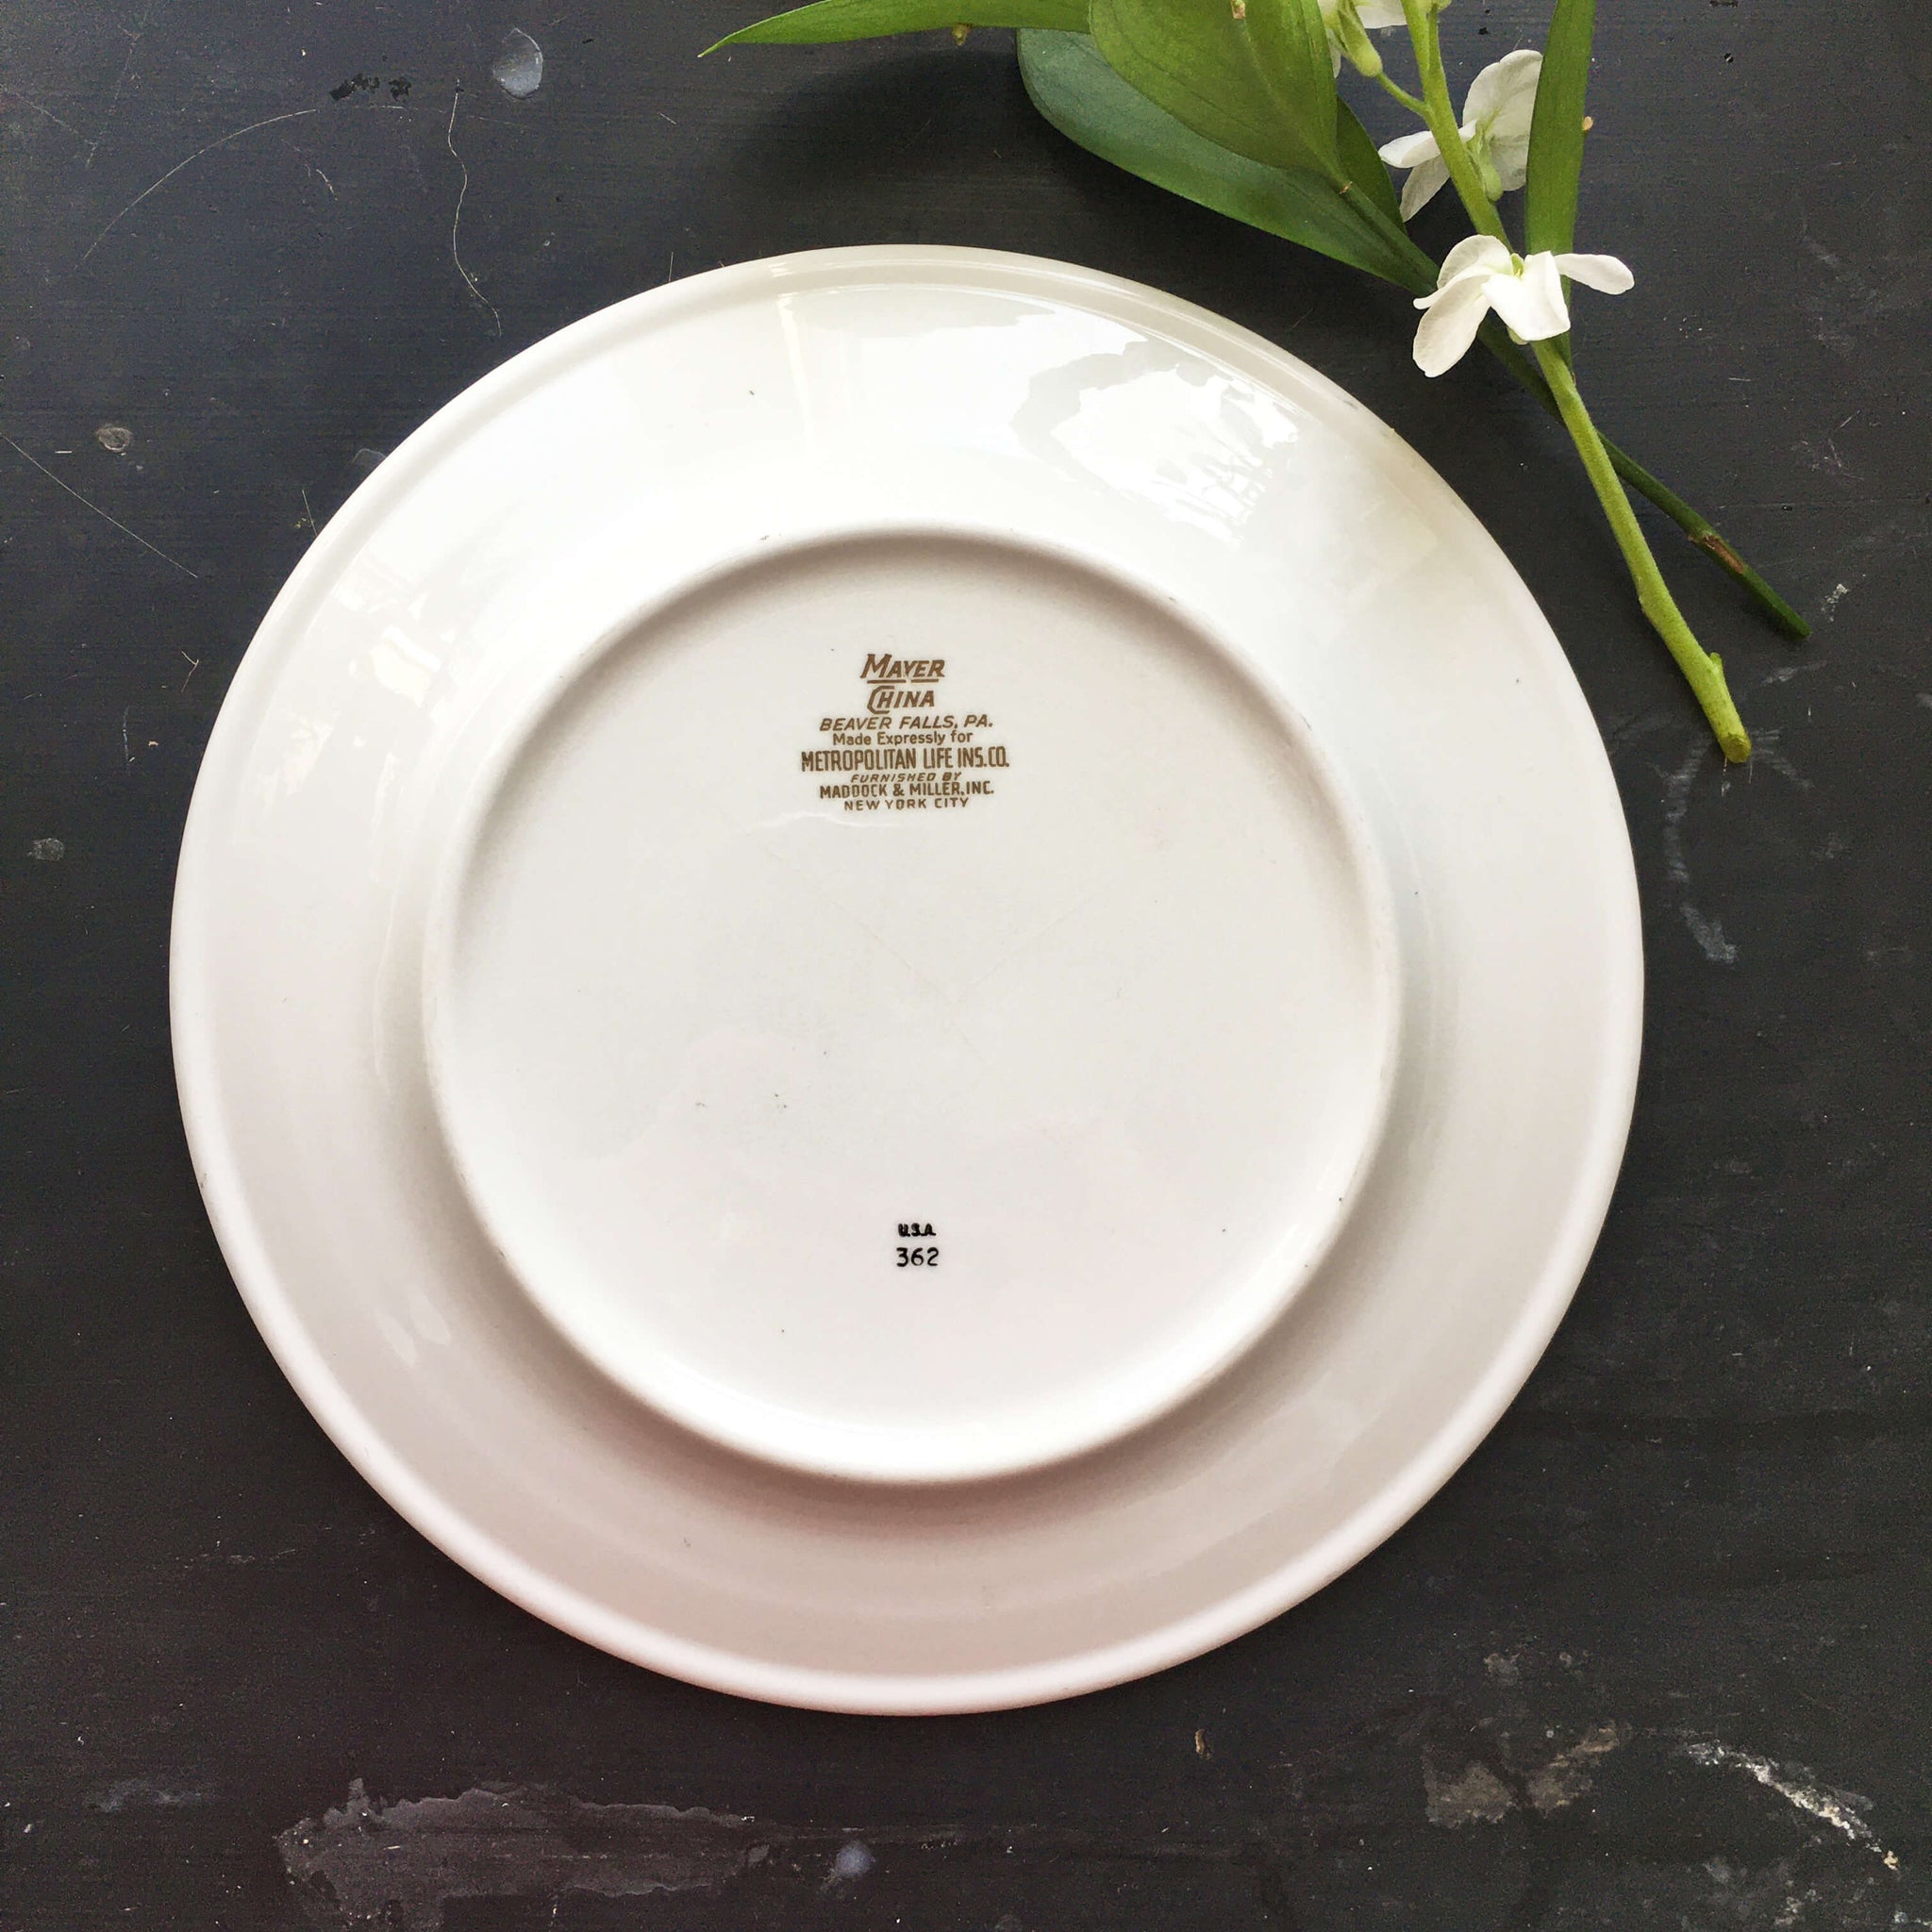 Vintage 1960s Metropolitan Life Insurance Company Luncheon Plate - Mayer China 1962 Restaurantware